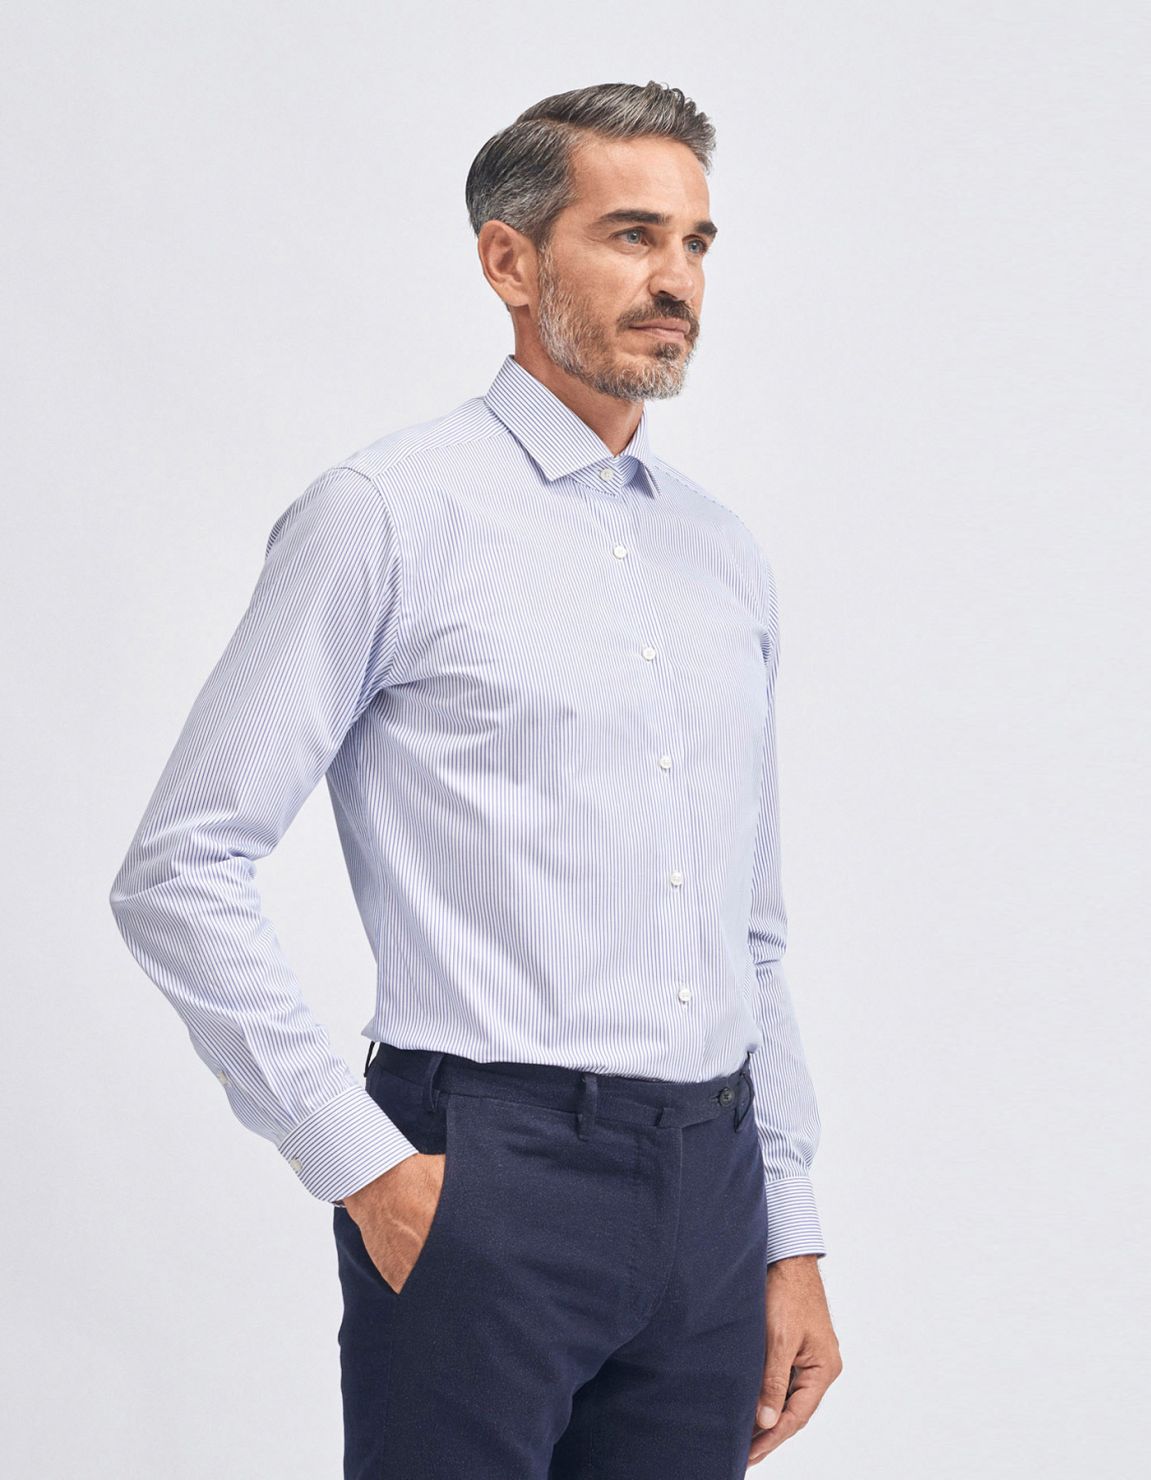 Shirt Collar small cutaway Blue Poplin Tailor Custom Fit 1